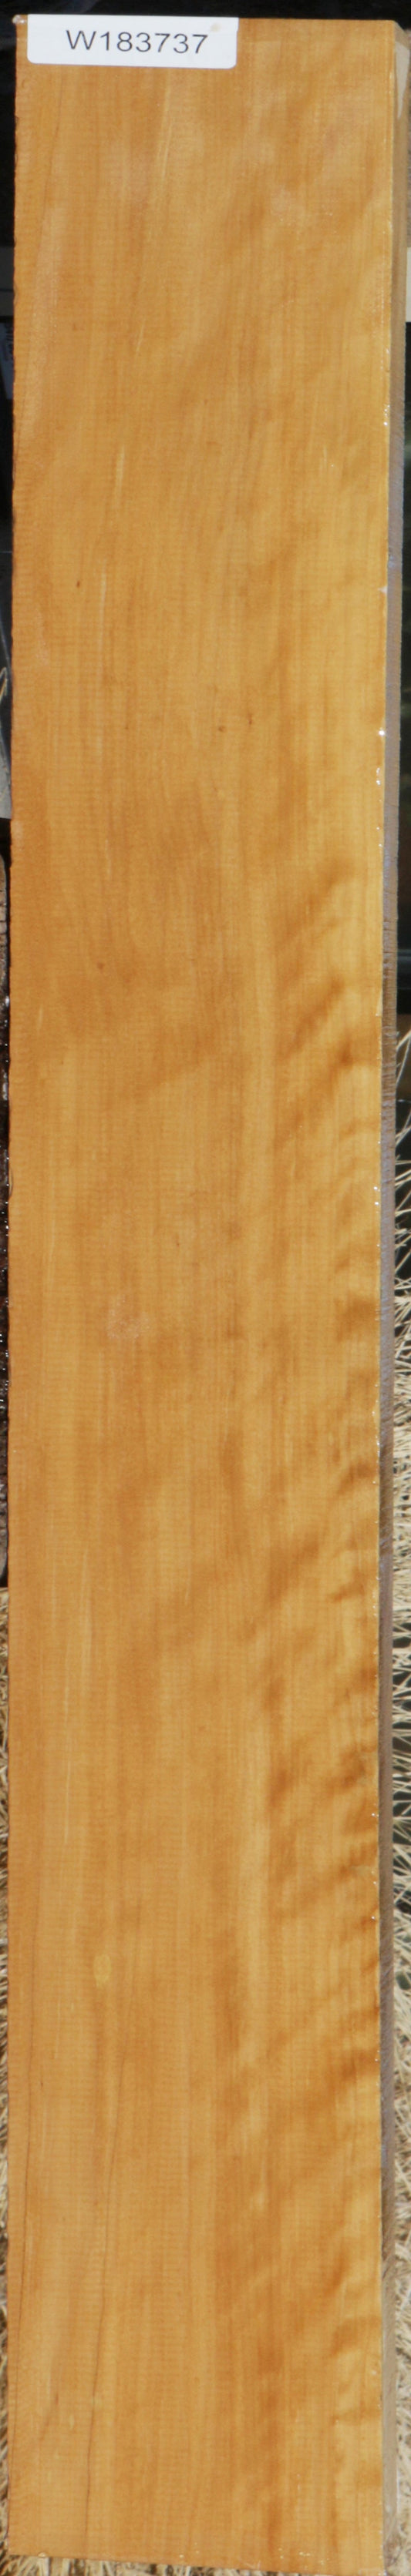 Extra Fancy Castello Boxwood Lumber